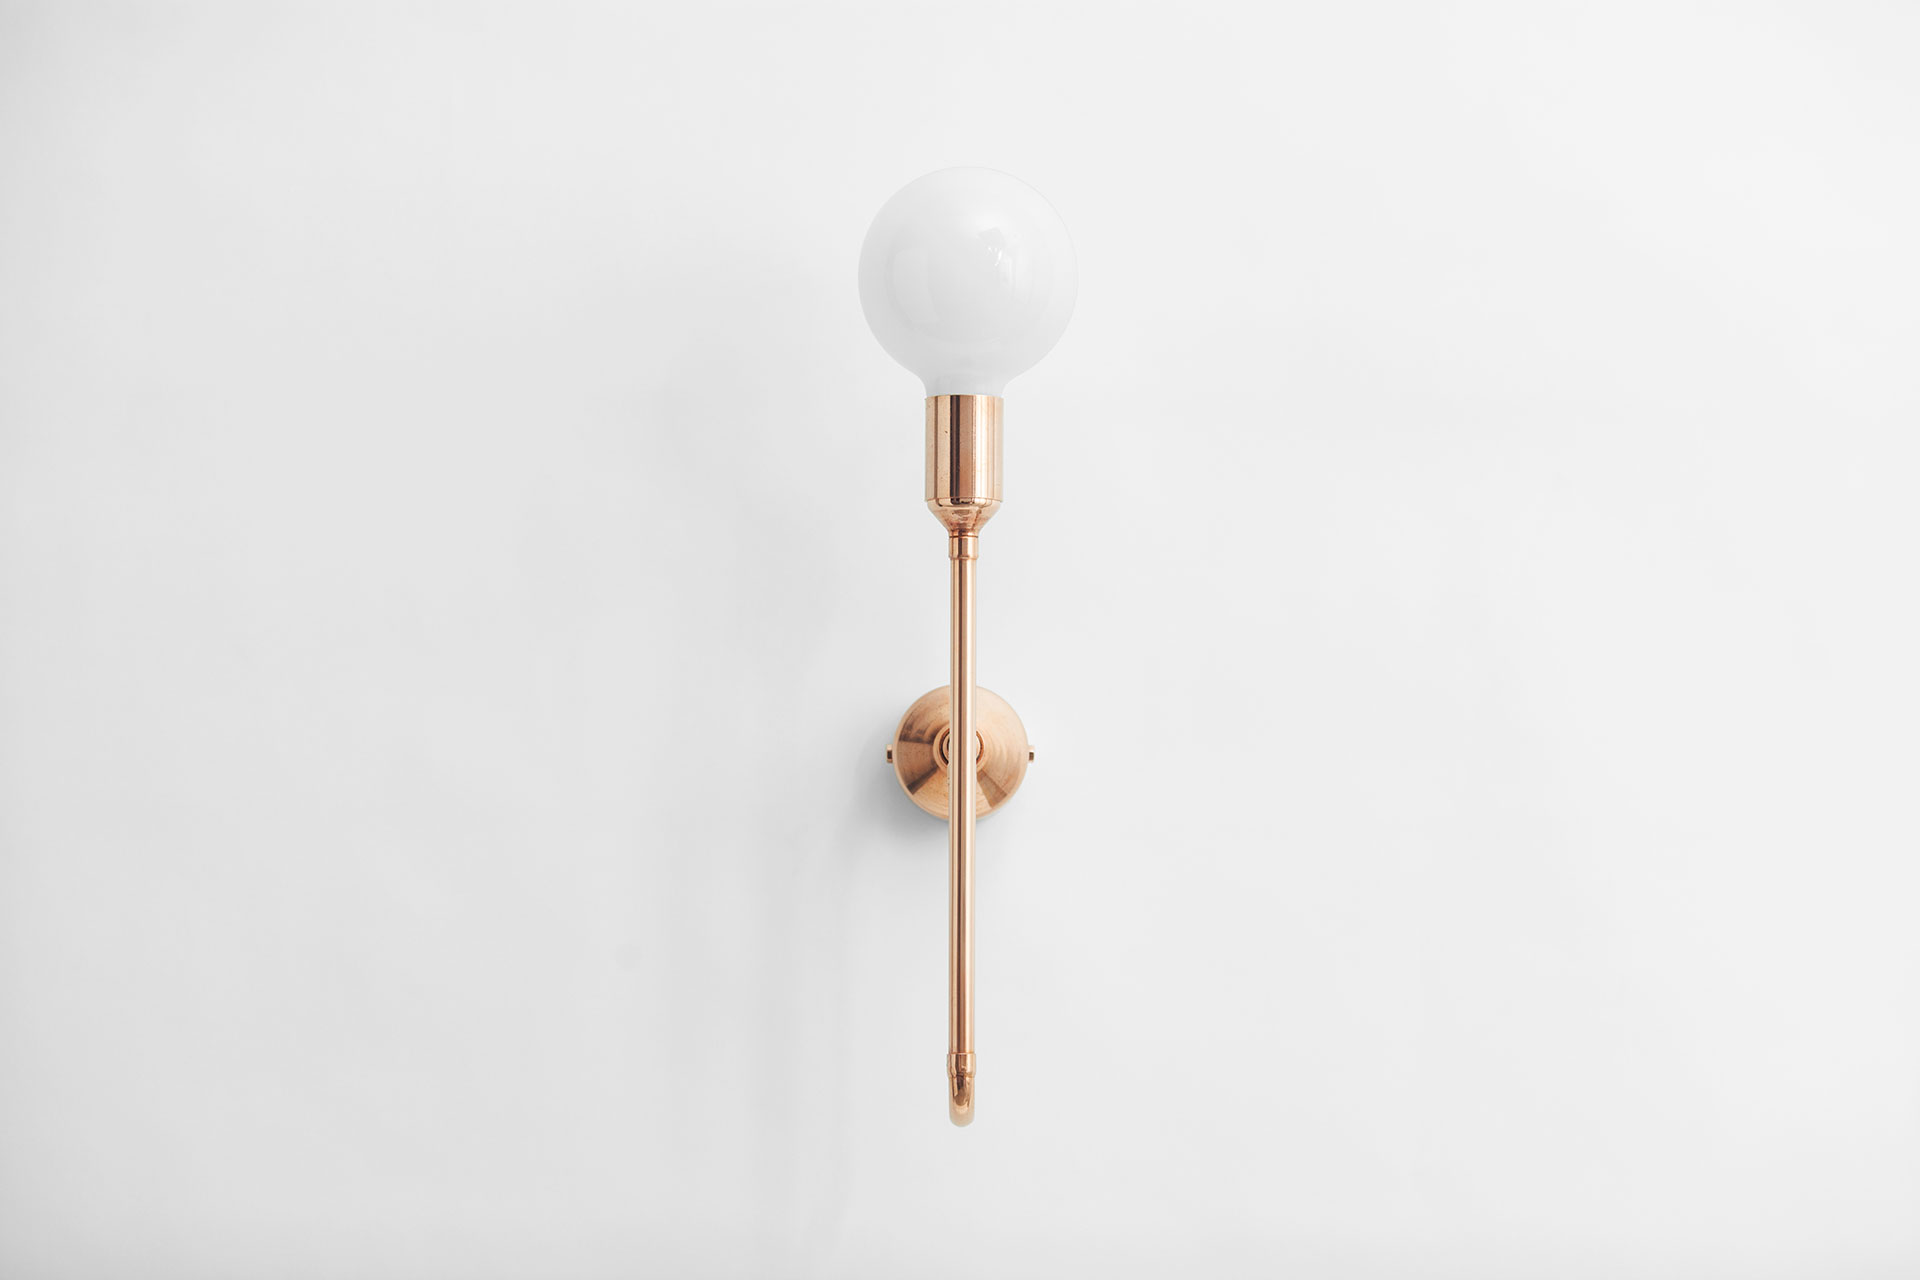 Modern minimalist sconce in copper or brass